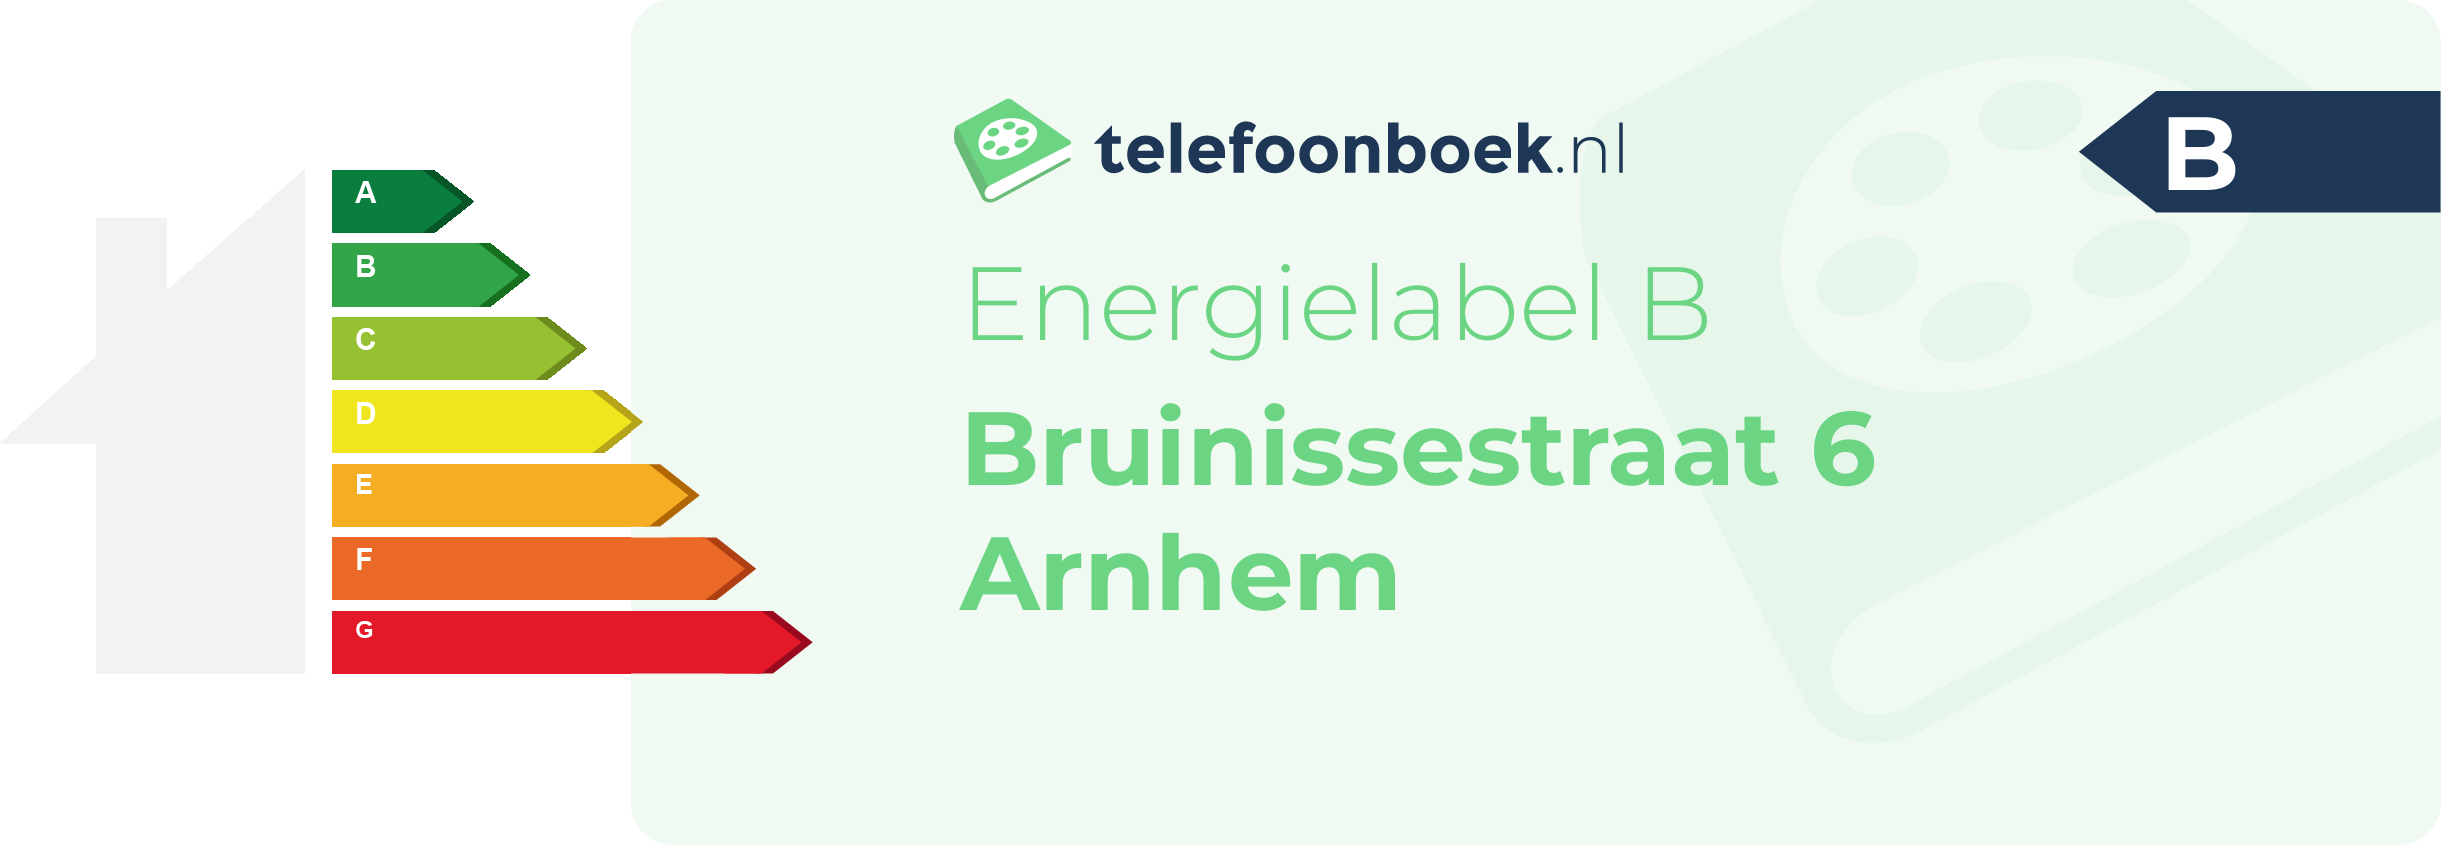 Energielabel Bruinissestraat 6 Arnhem